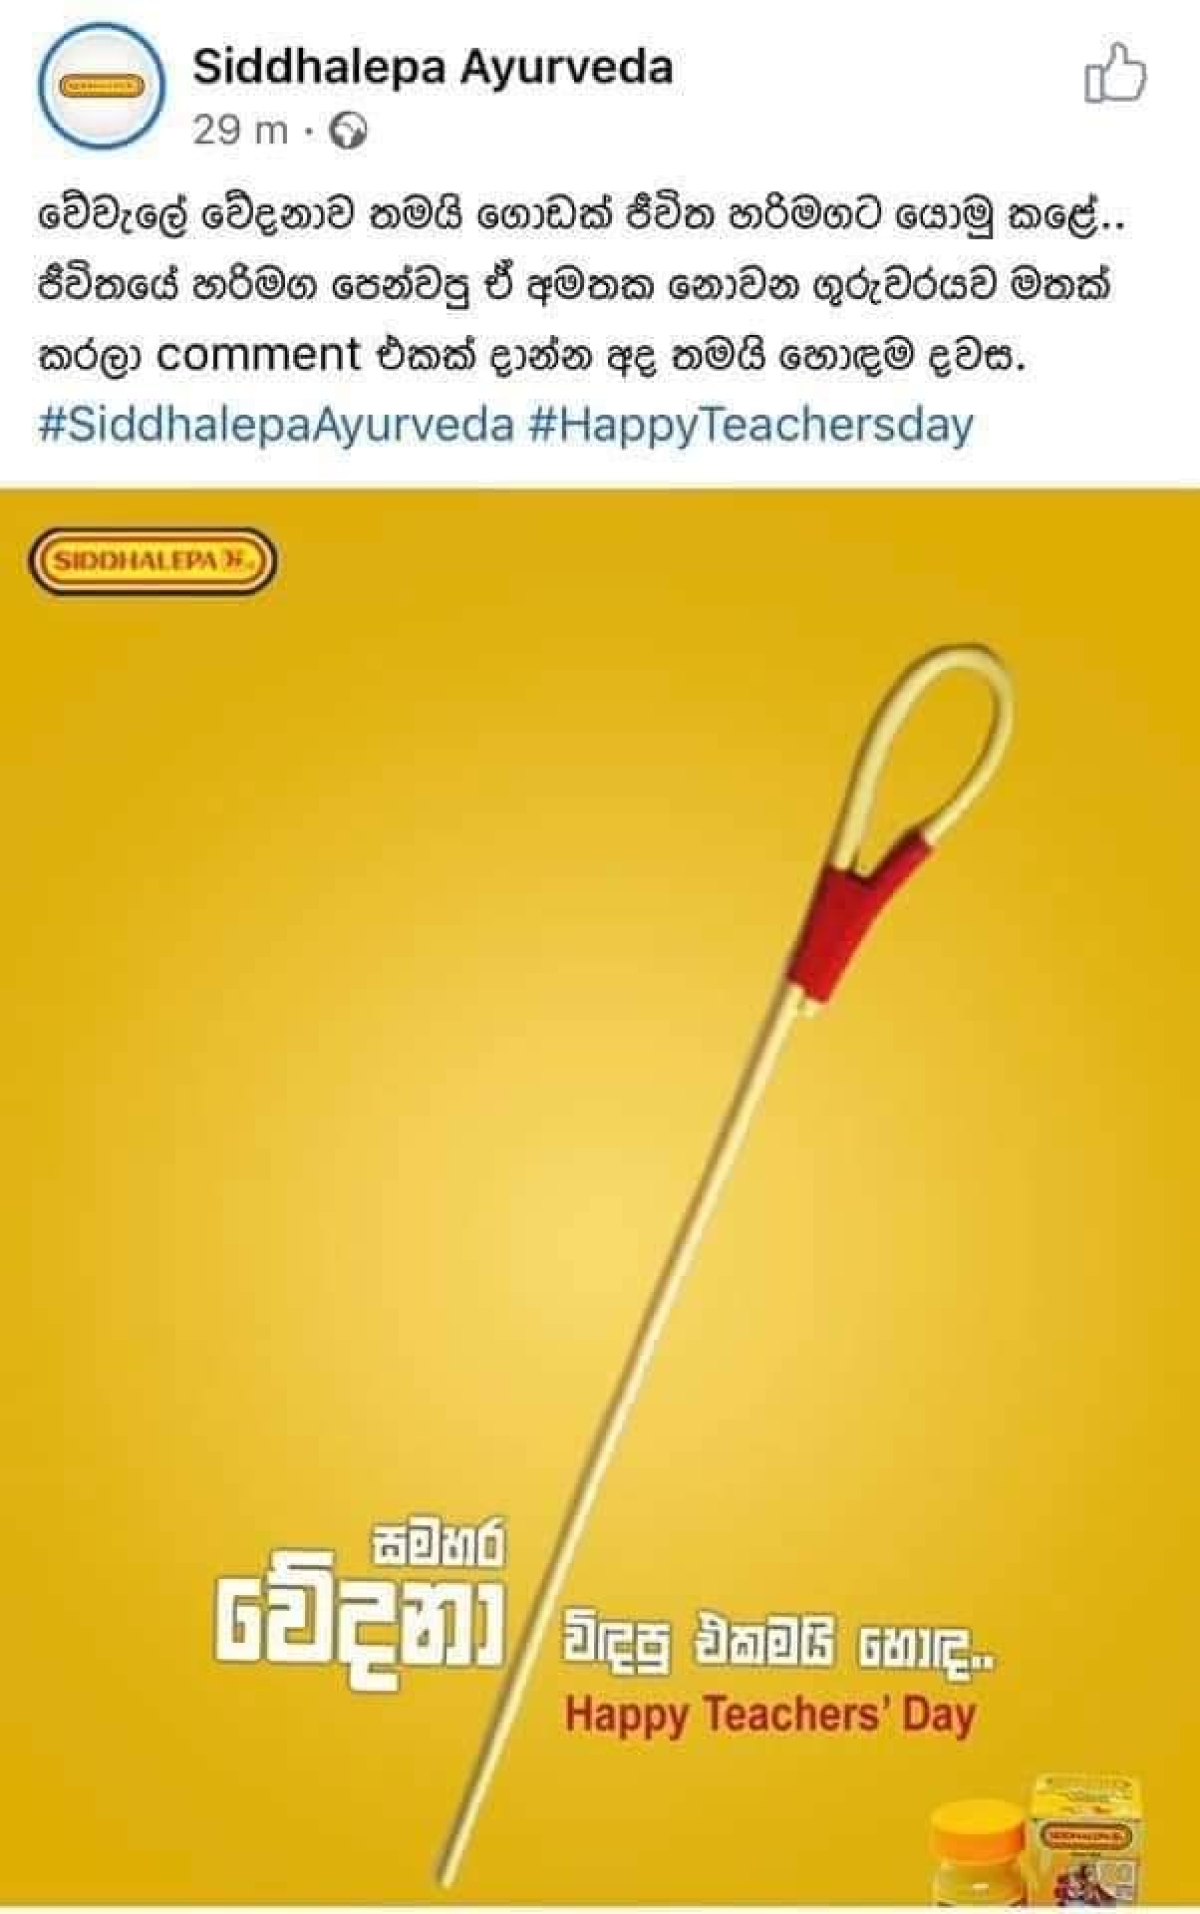 Sri Lanka&#039;s Wellness Brand Siddhalepa Under Fire For Endorsing Corporal Punishment On Teacher&#039;s Day